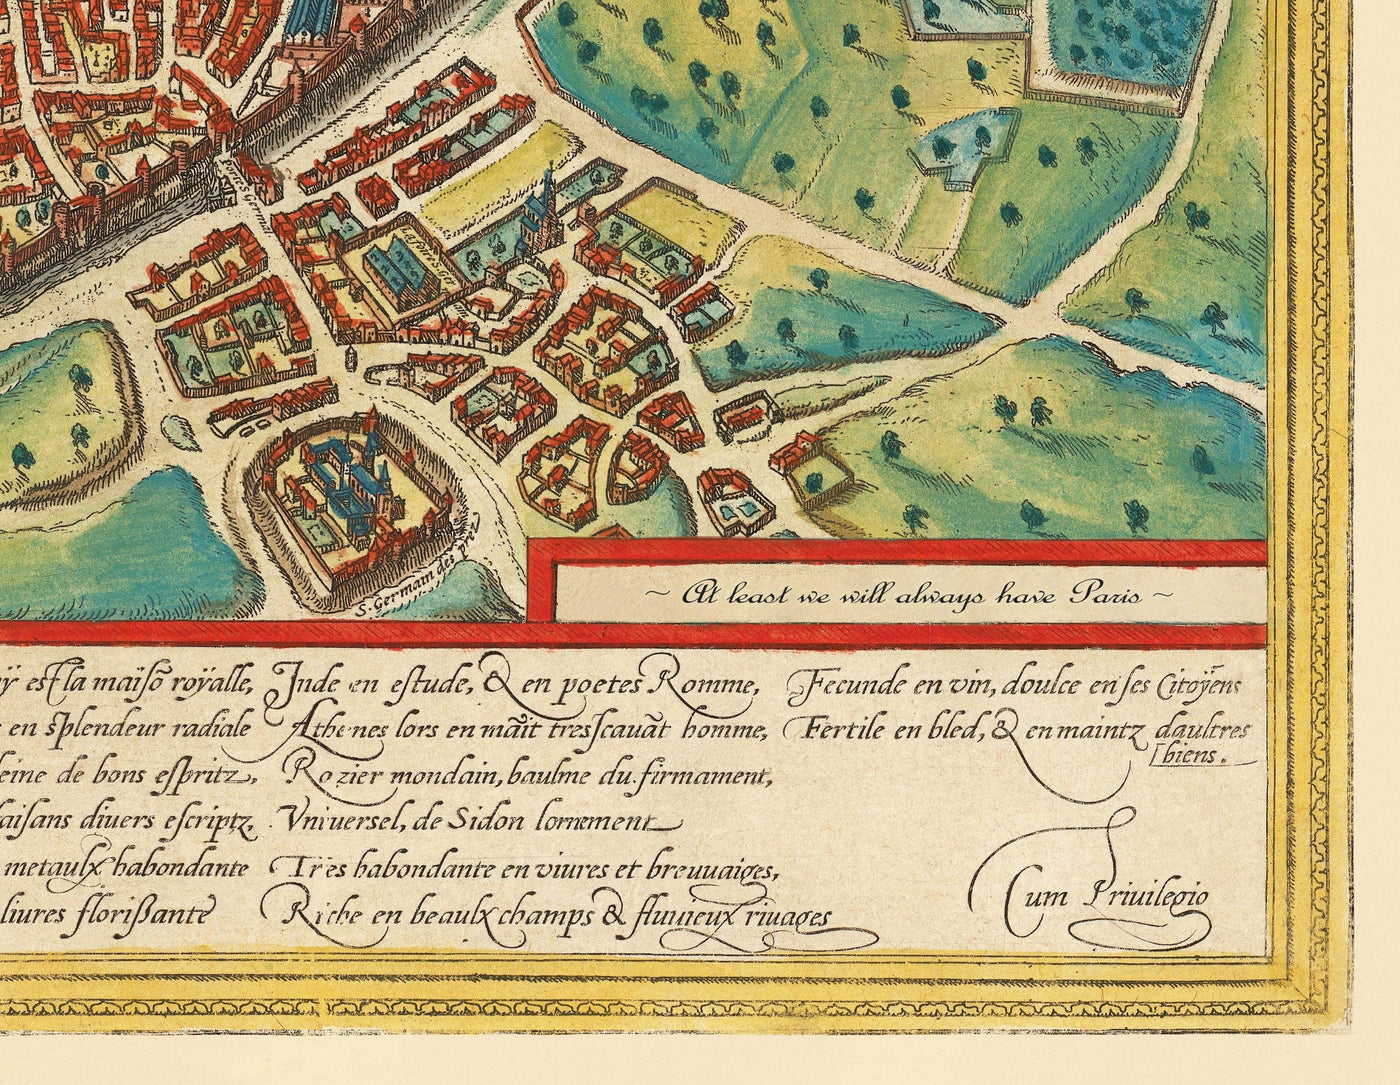 Old Map of Prague, Czechia by Georg Braun, 1572 - Bohemia, Castle, Vltava, Týn Teyn Church, Old Town, Mala Strana